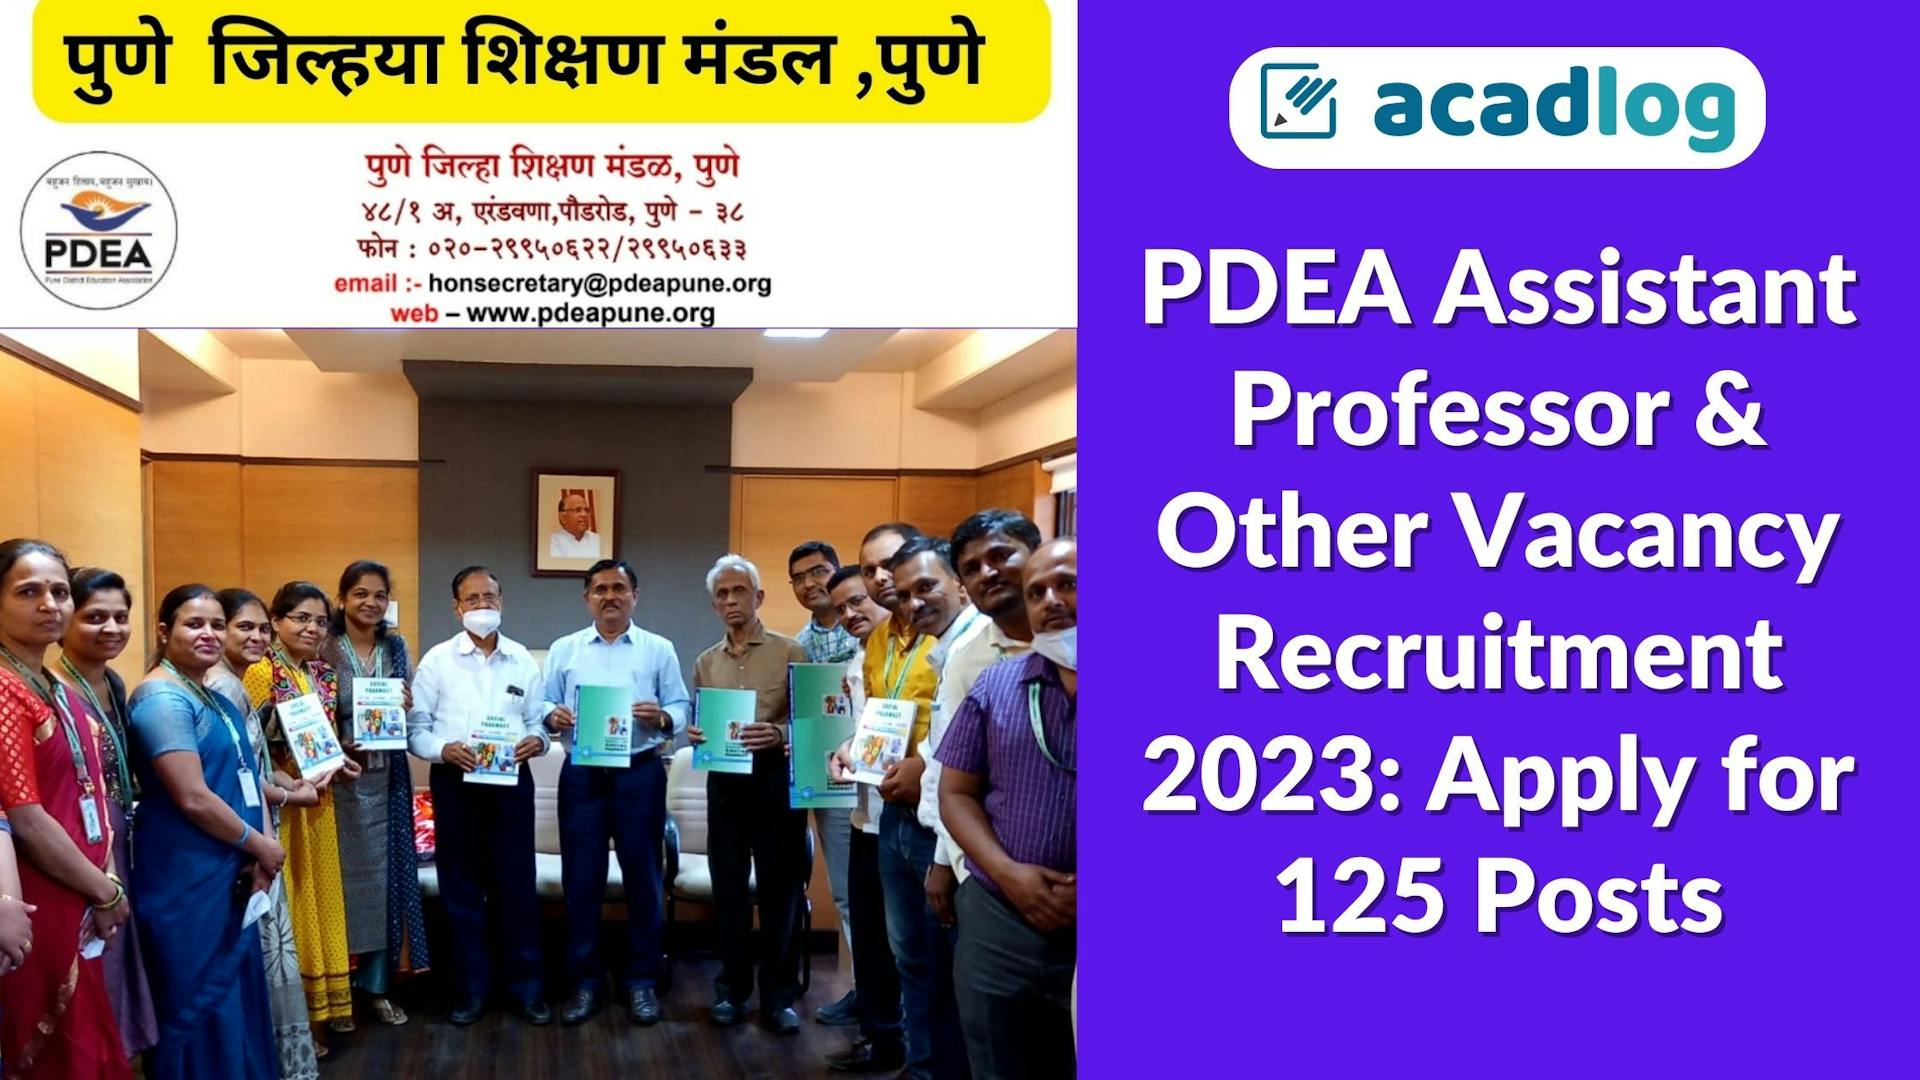 Pune Govt Jobs 2023: Recruitment for Asst. Professor & Other Vacancies